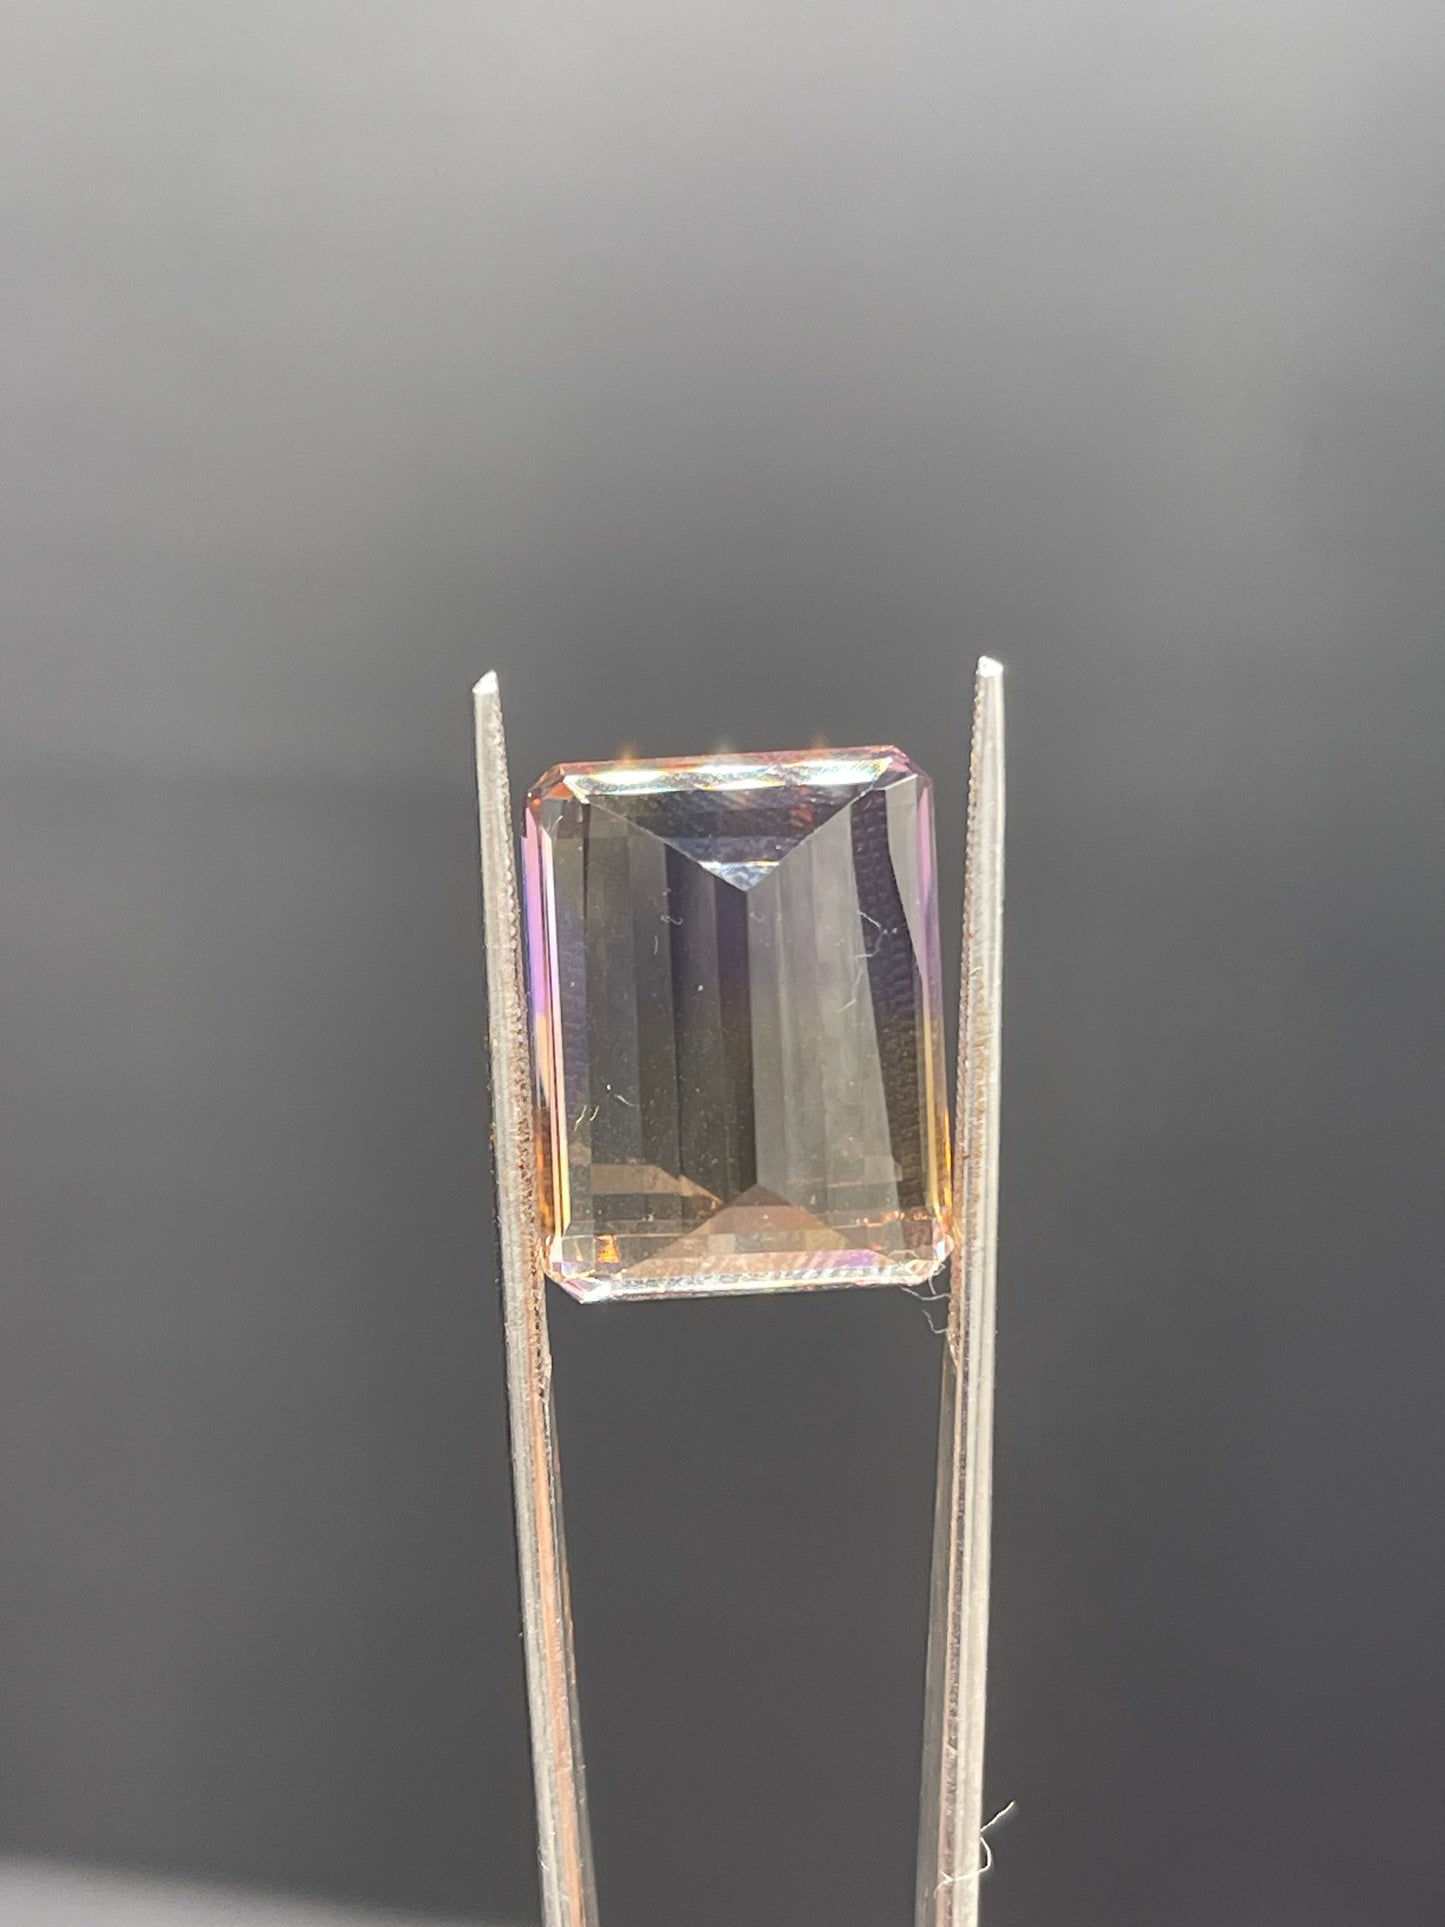 18 Carat Natural Bolivian Ametrine Emerald Cut Loose Gemstone (14x18x9 MM)